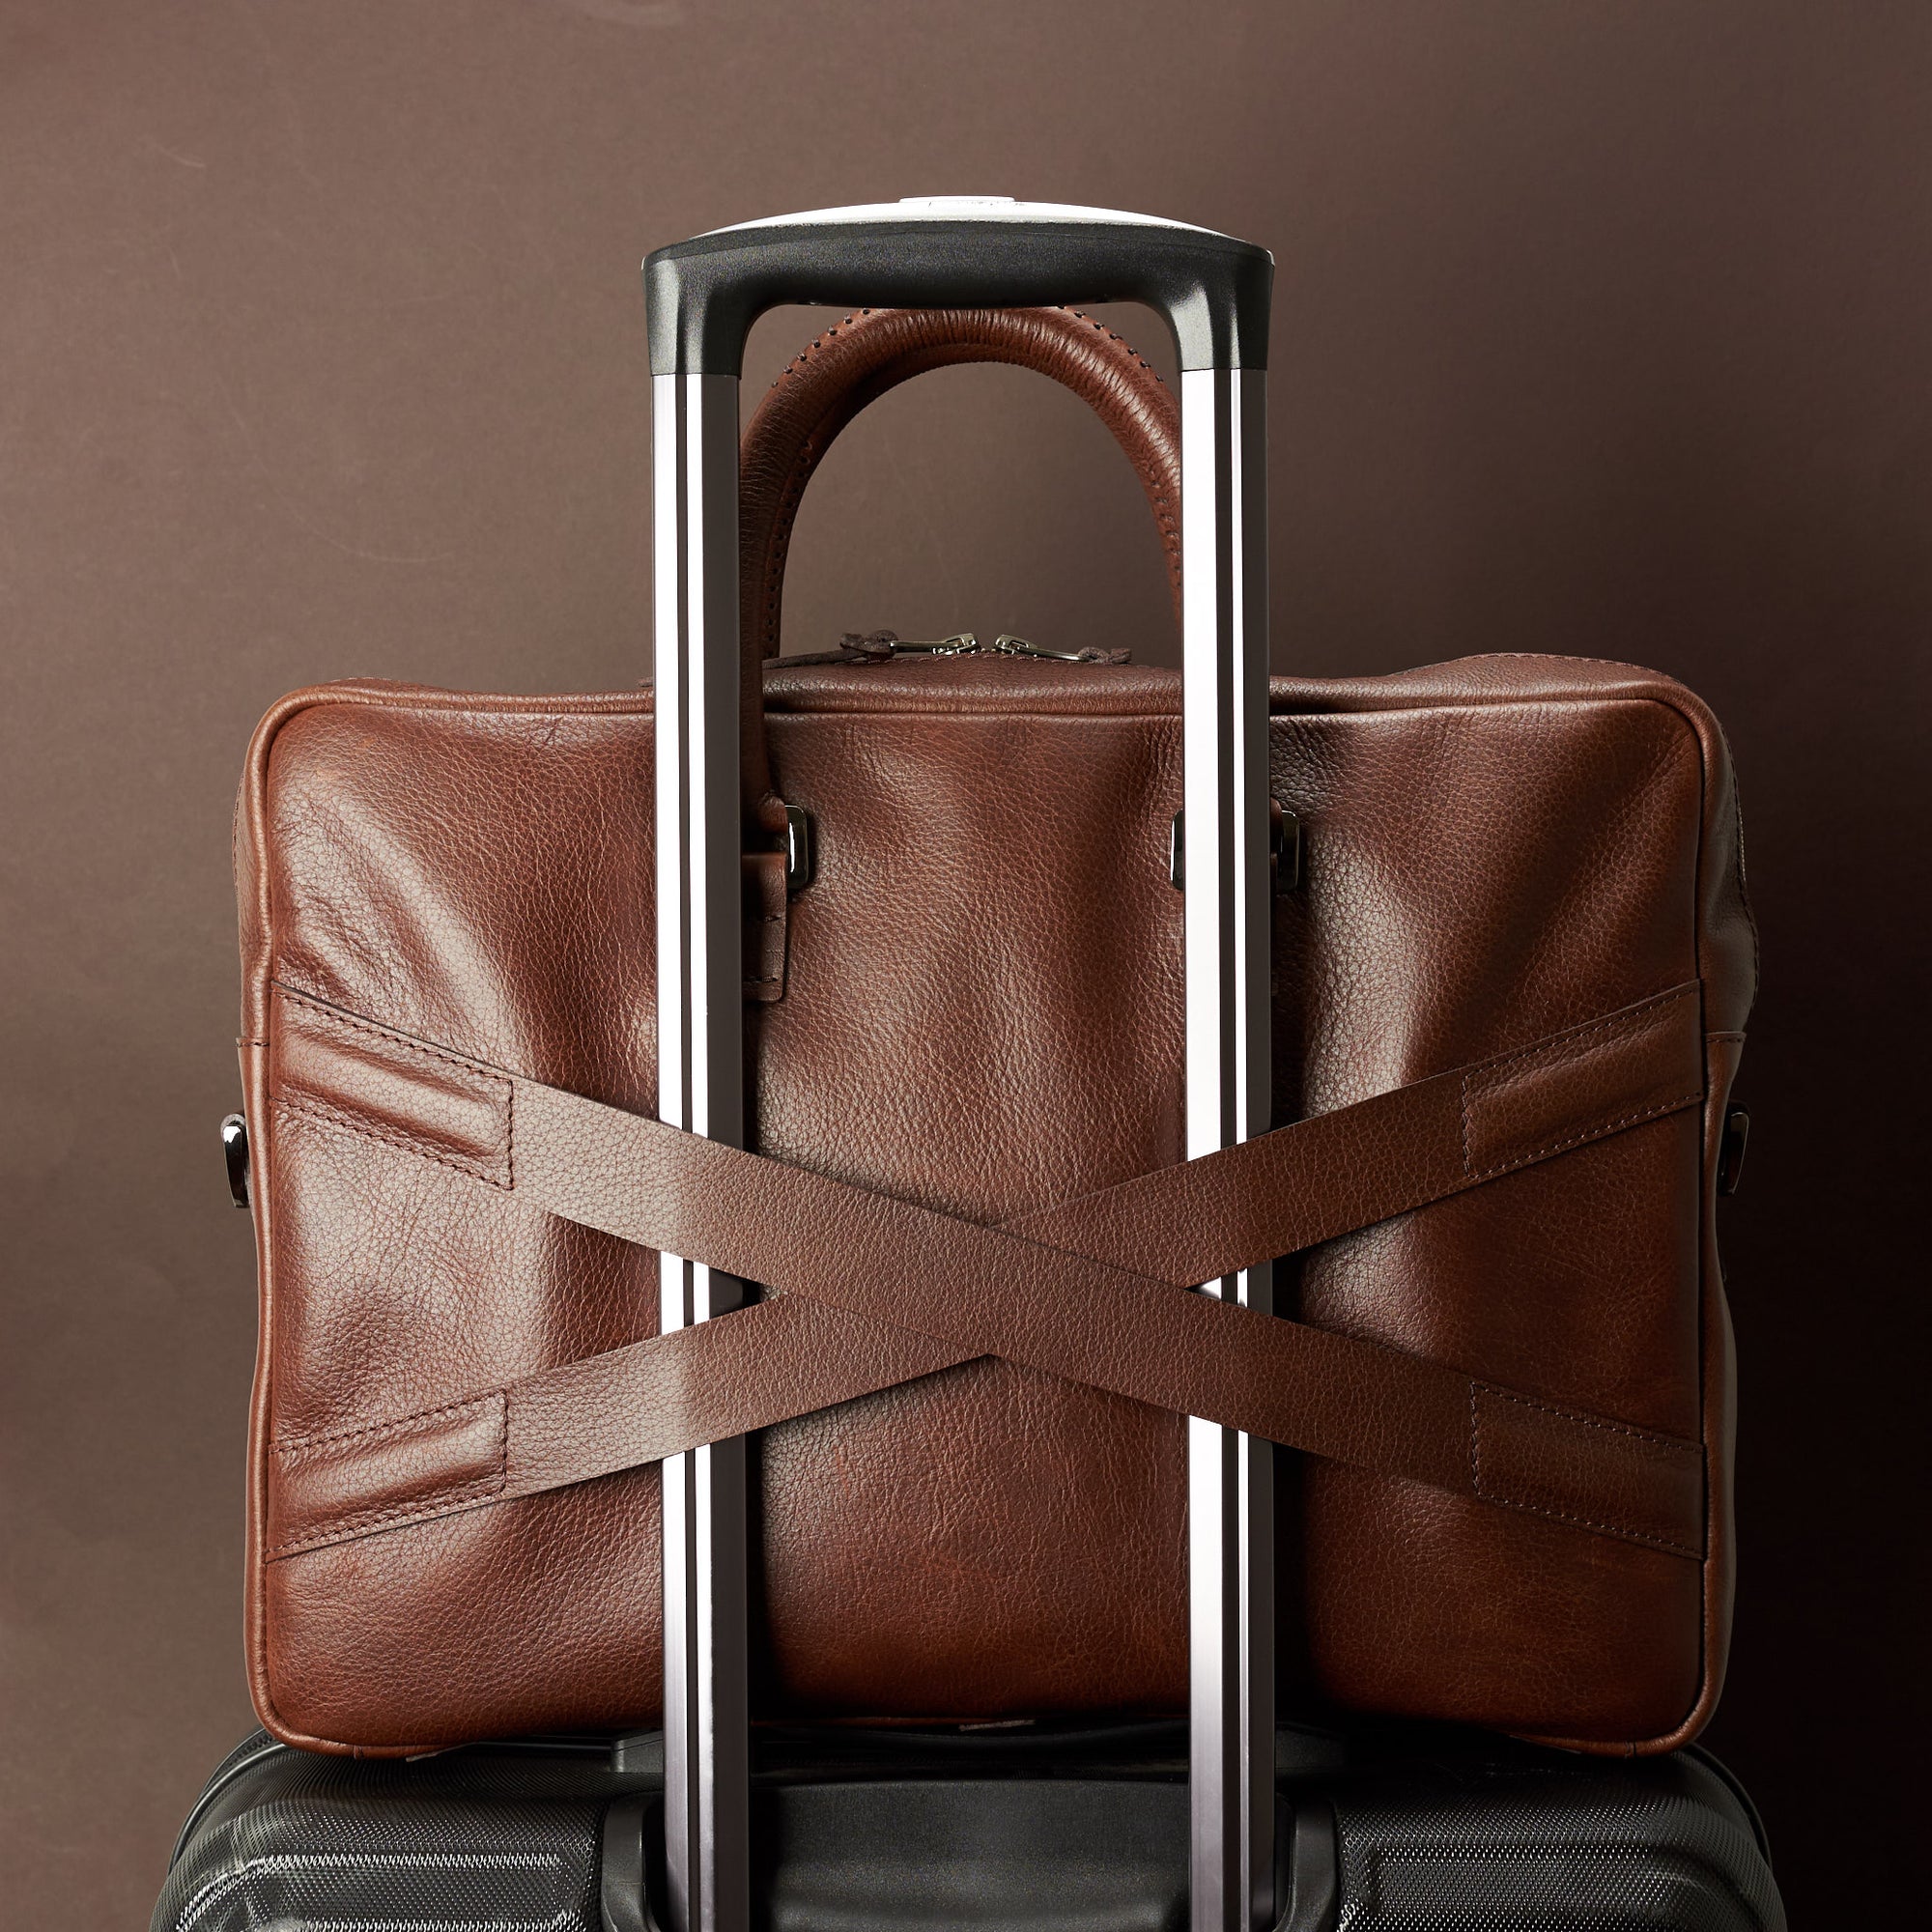 Luggage strap in x shape for messenger bag. Brown leather briefcase laptop bag for men. Gazeli laptop briefcase by Capra Leather.